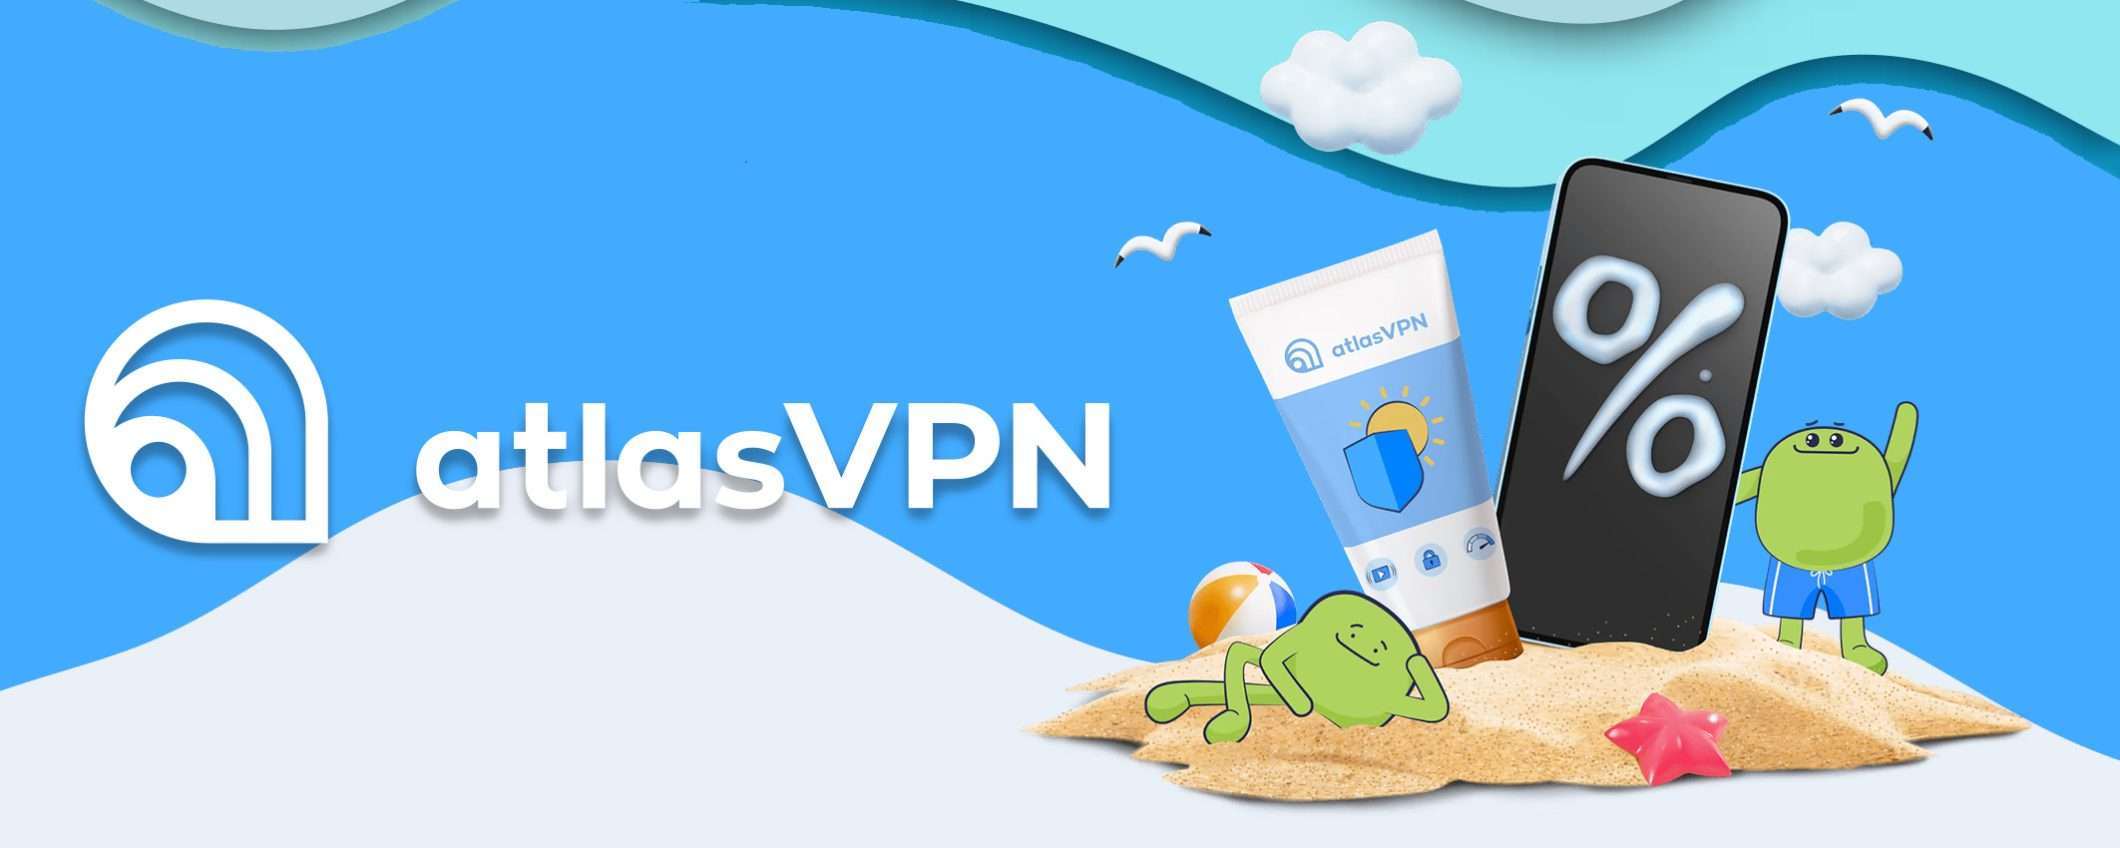 Atlas VPN, l'estate è arrivata: per te 2 anni a meno di 2€ al mese